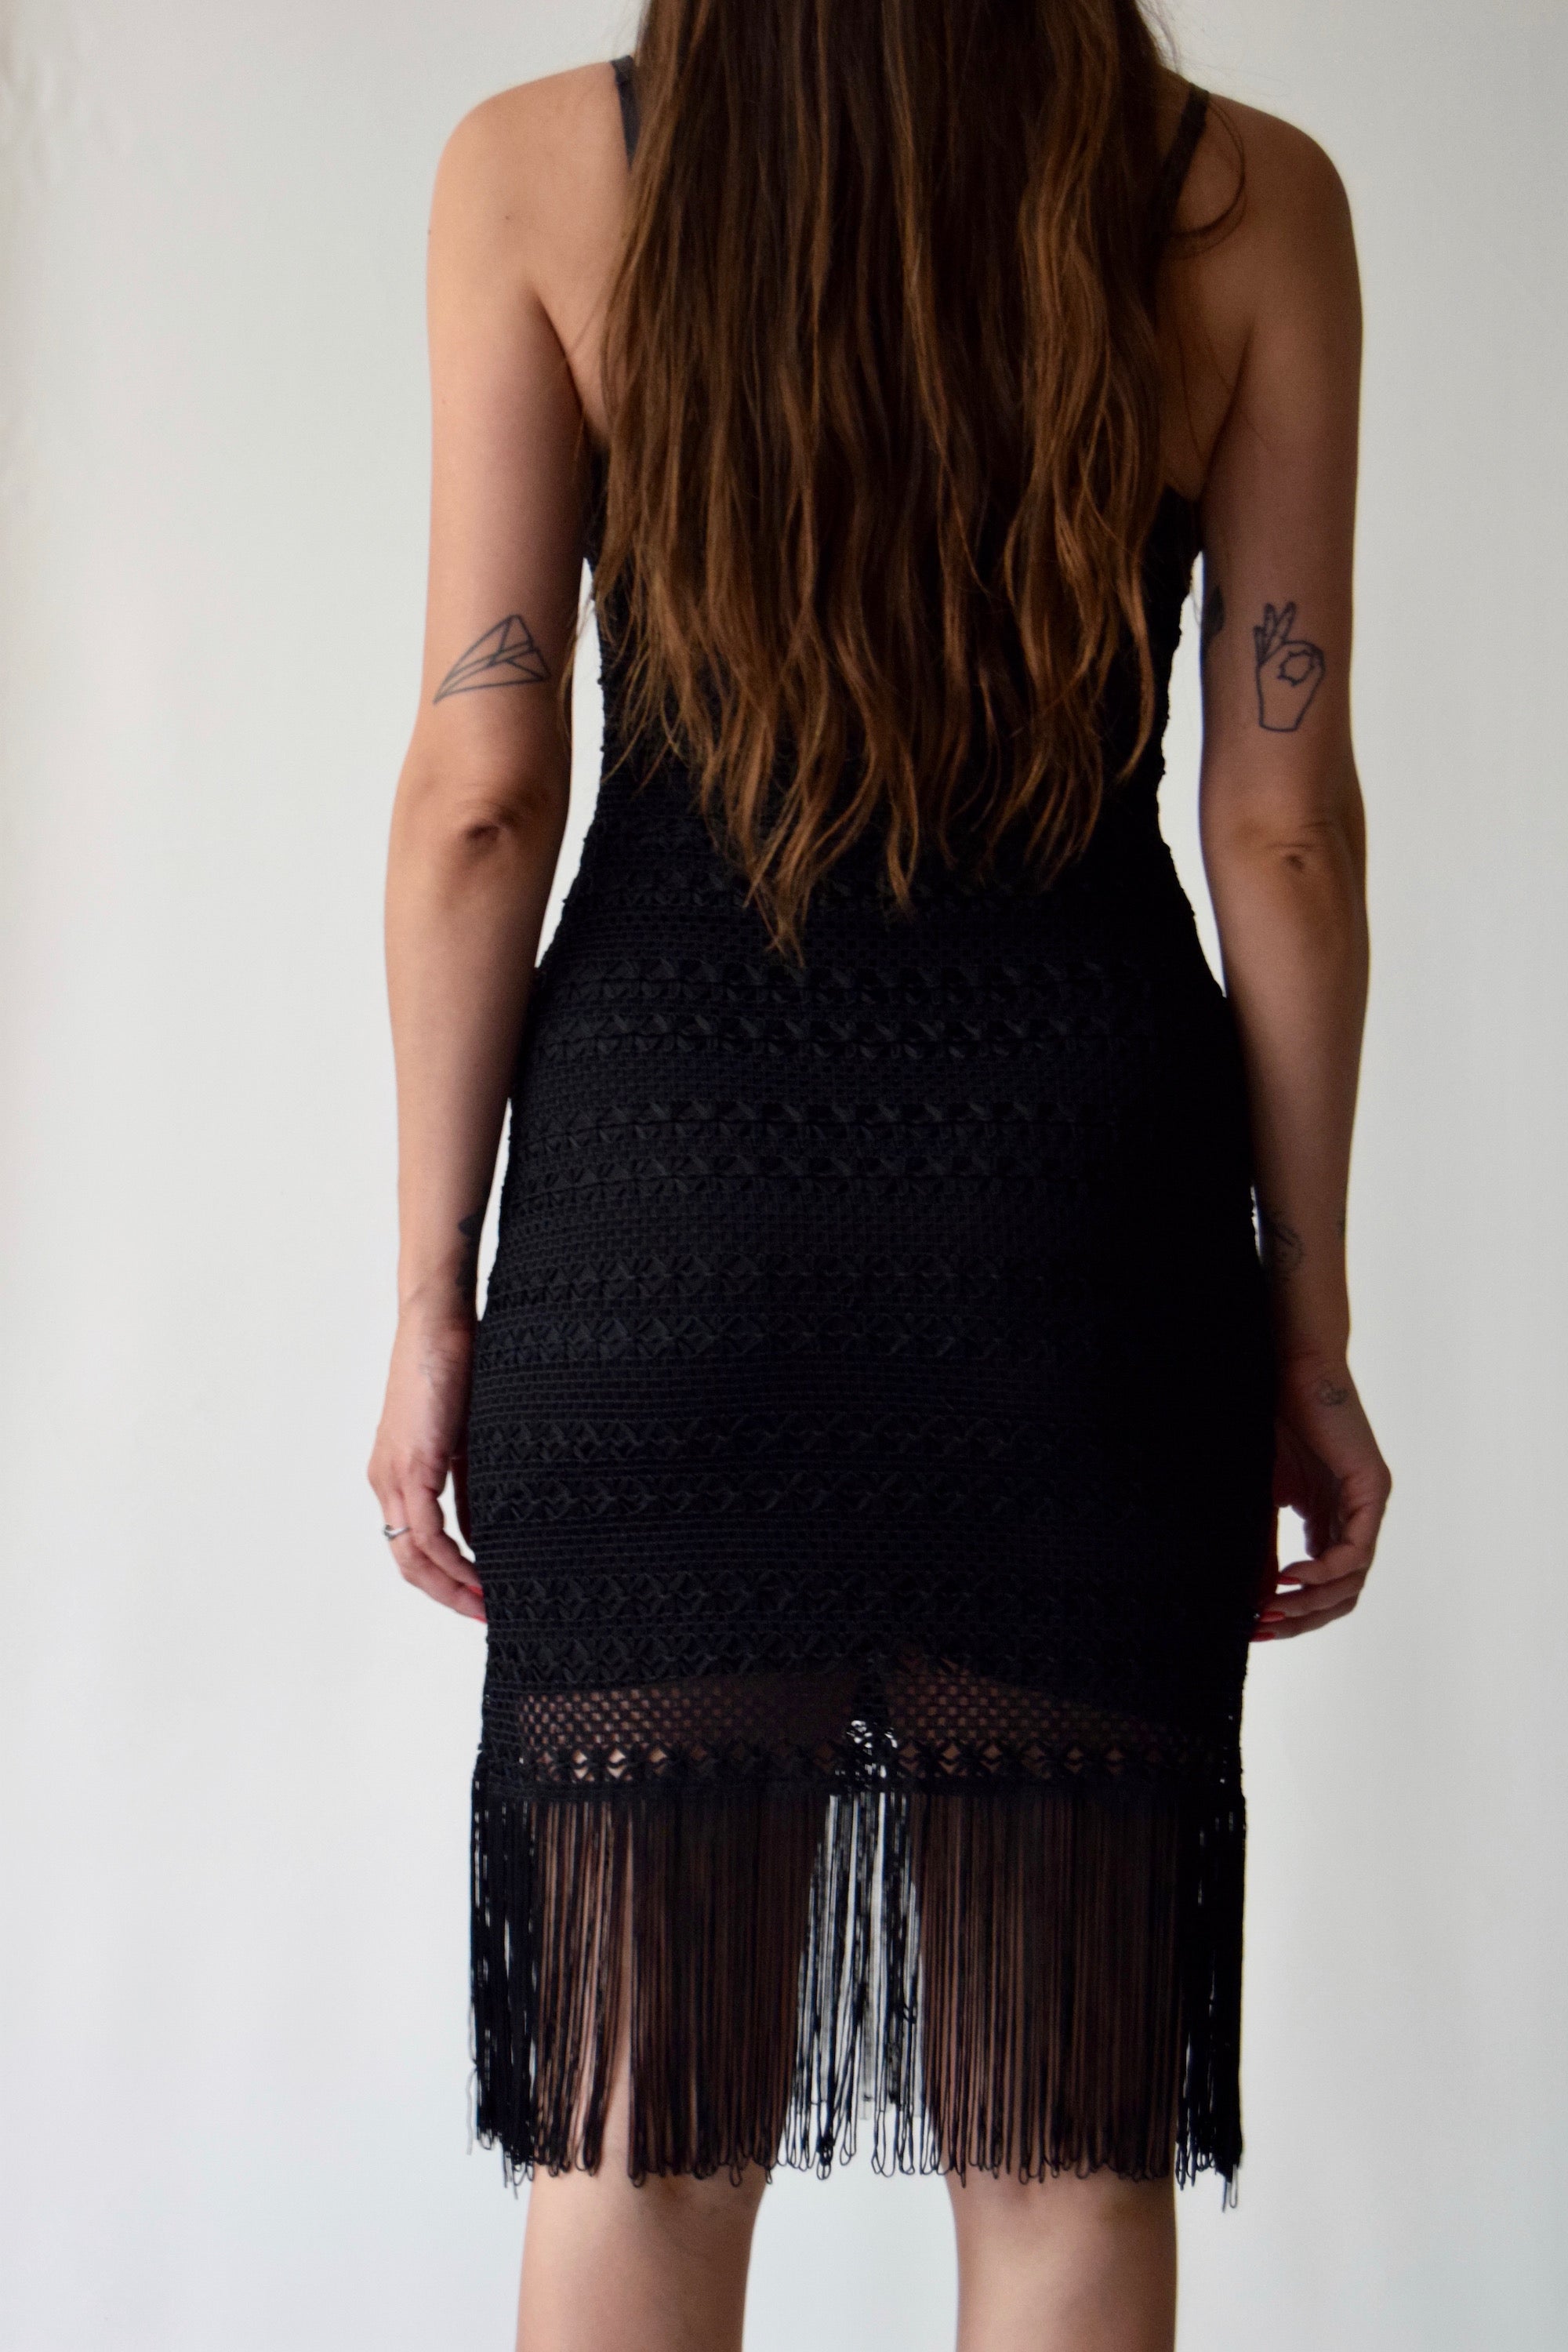 Black Sexy Crocheted Fringe Dress